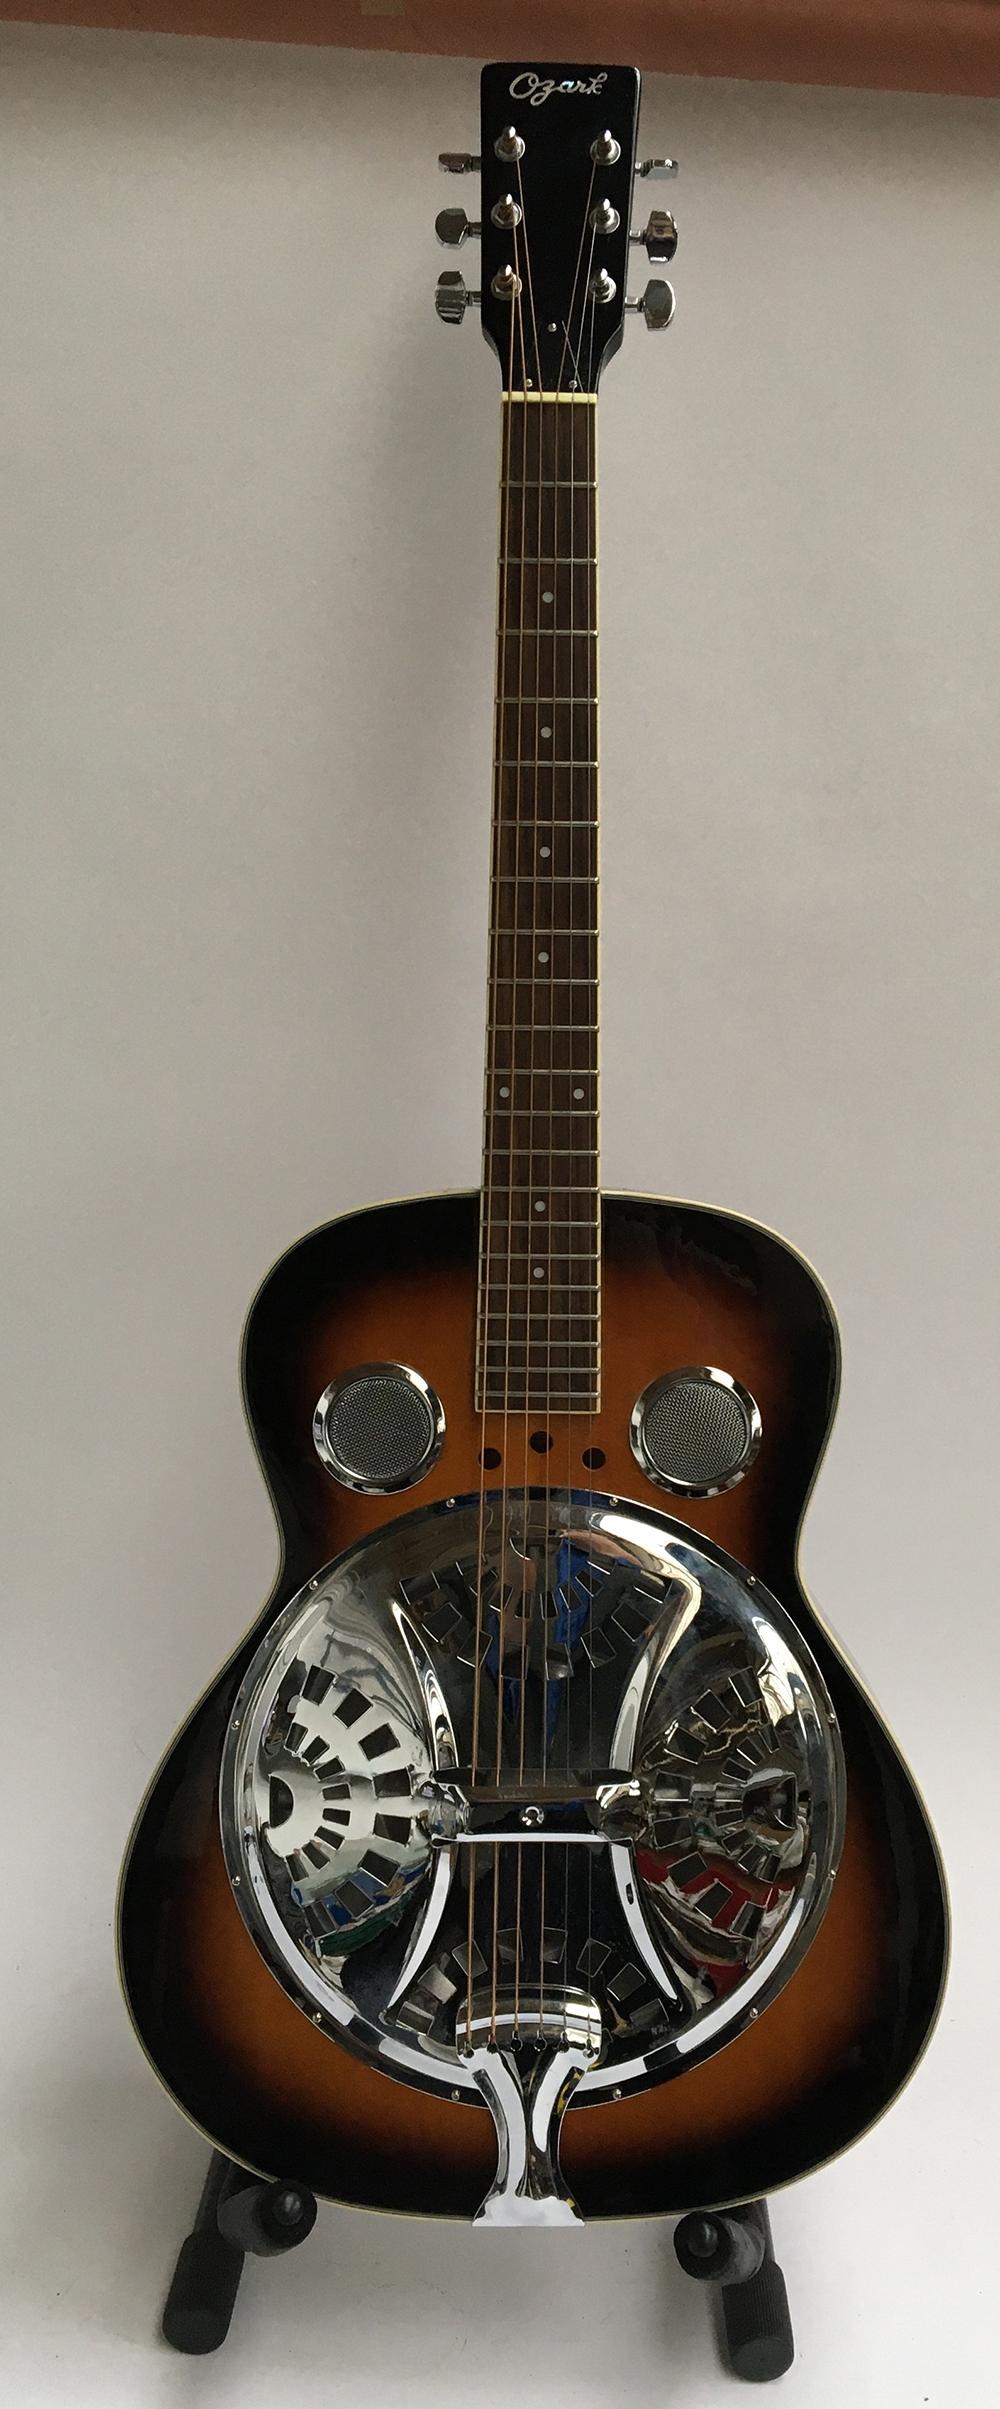 An Ozark resonator guitar, model 3515